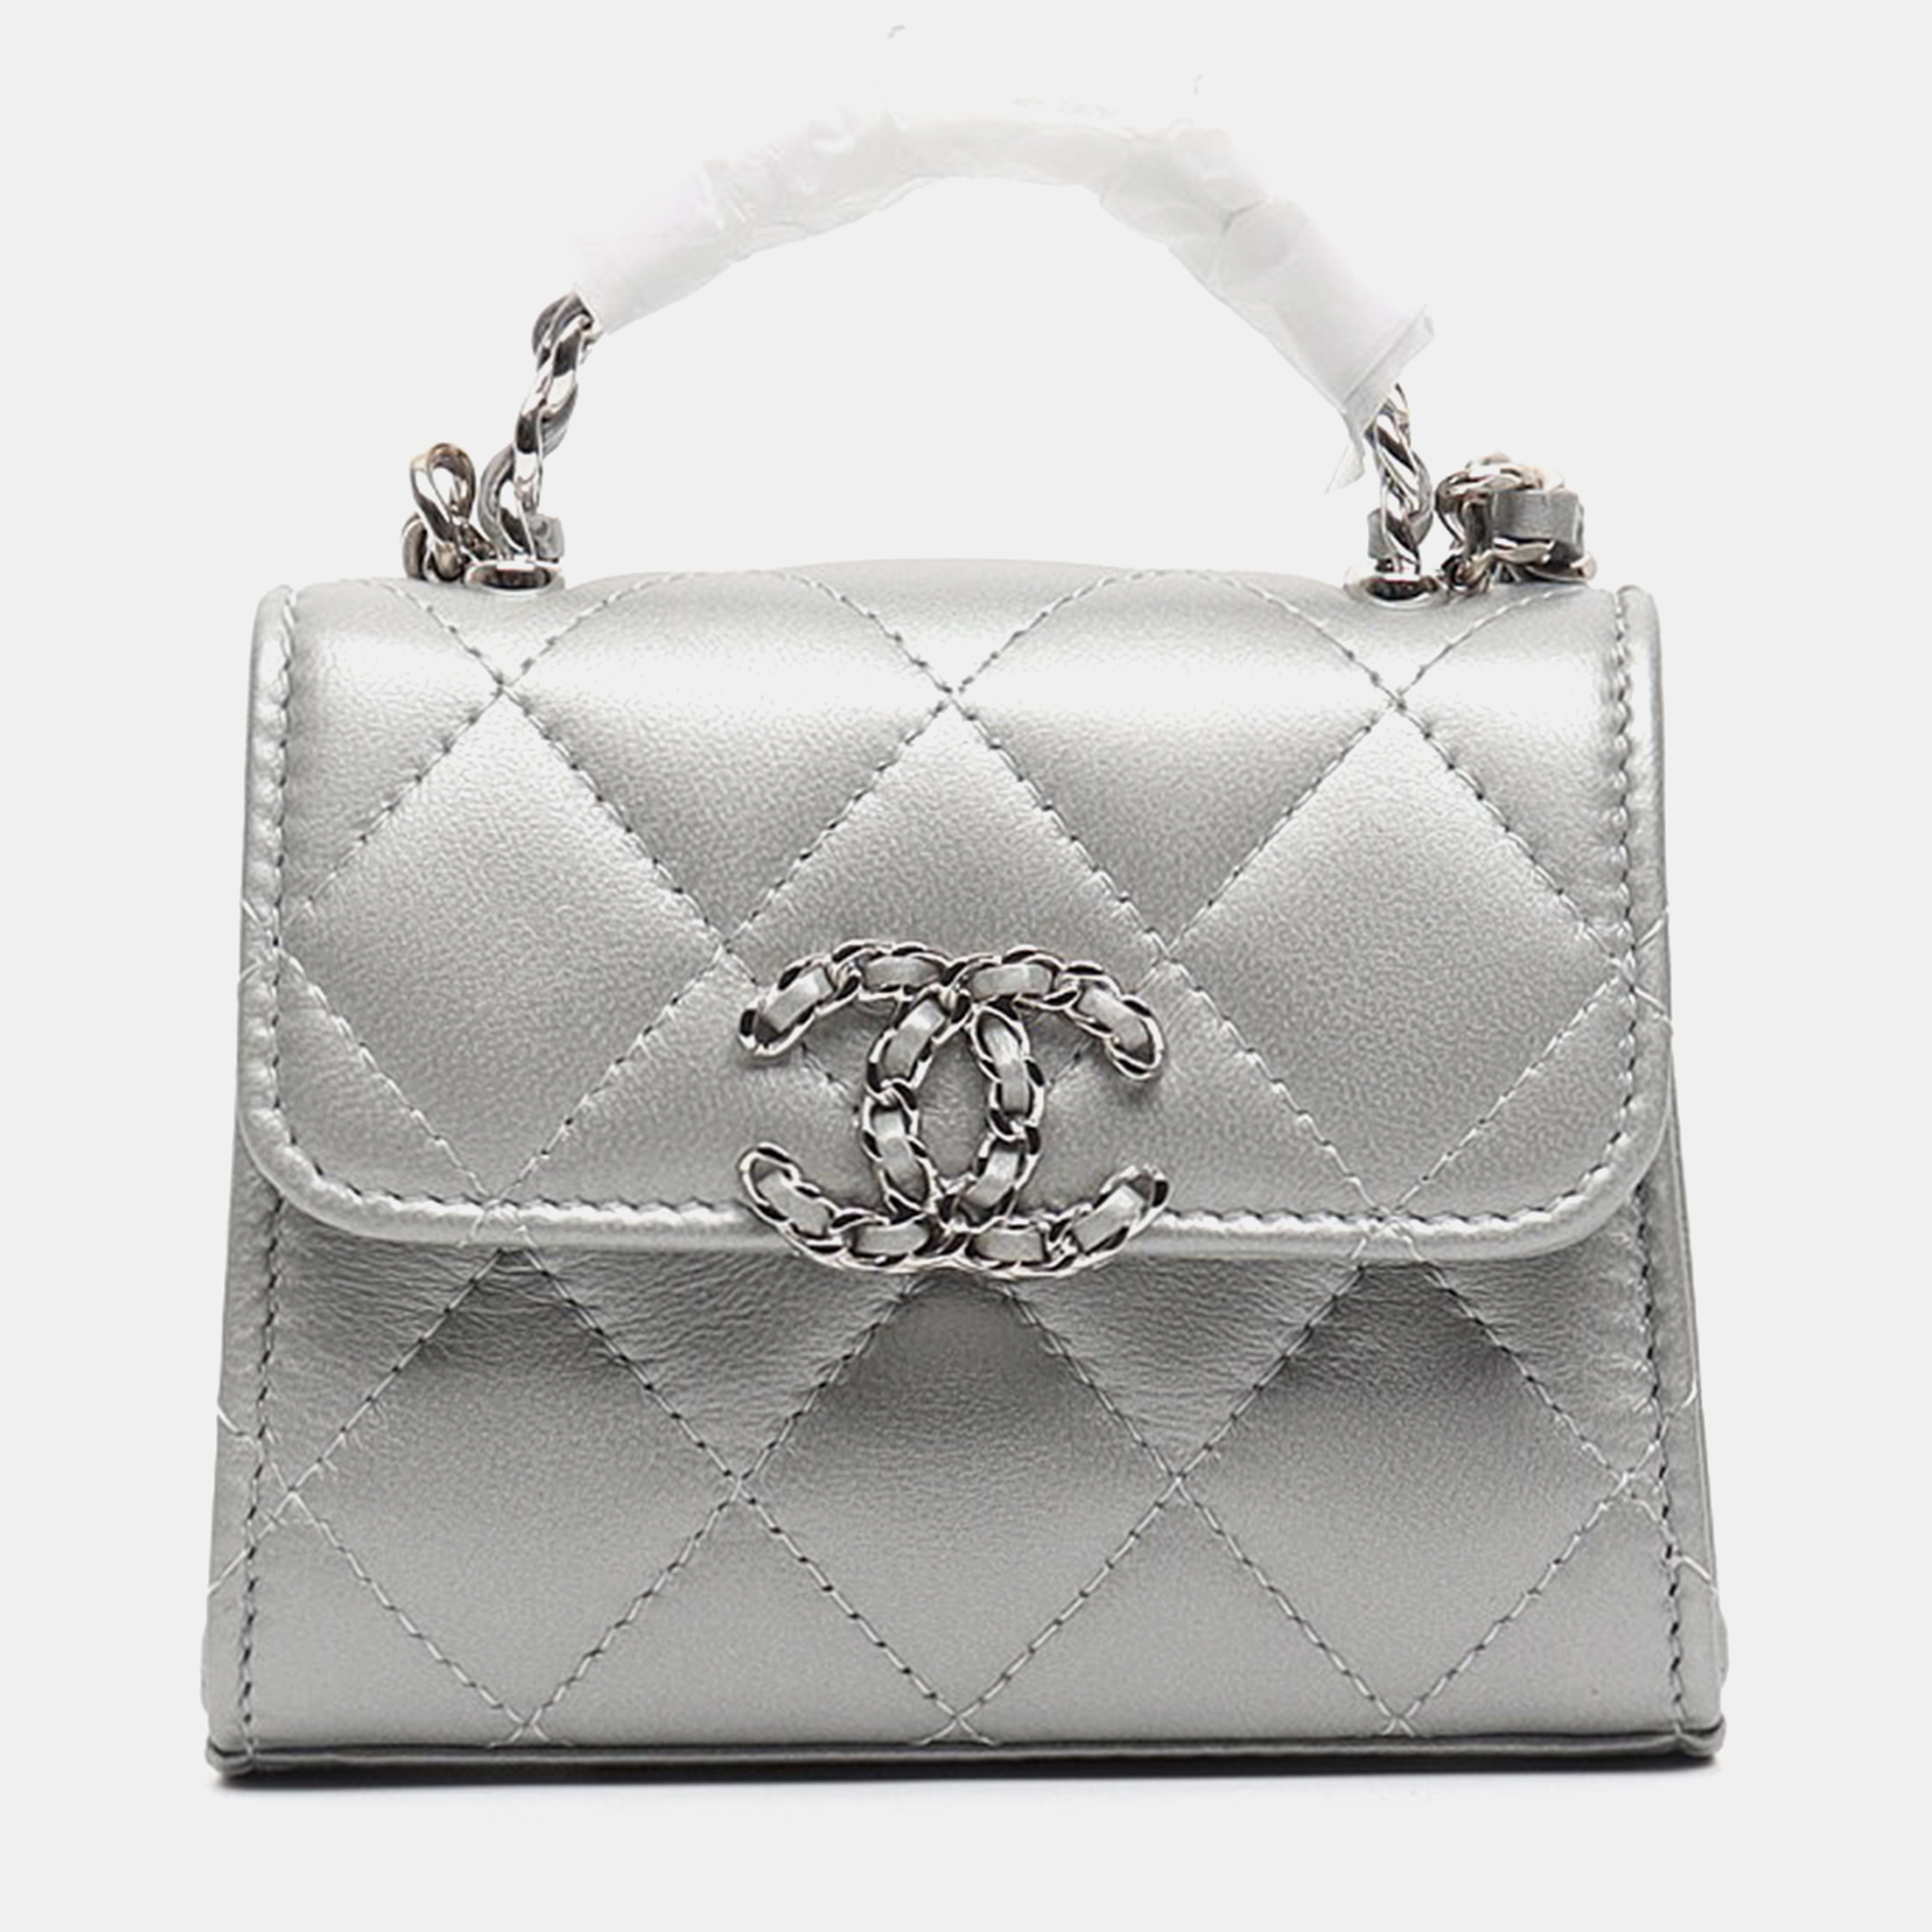 Chanel grey lambskin leather top handle mini crossbody bag